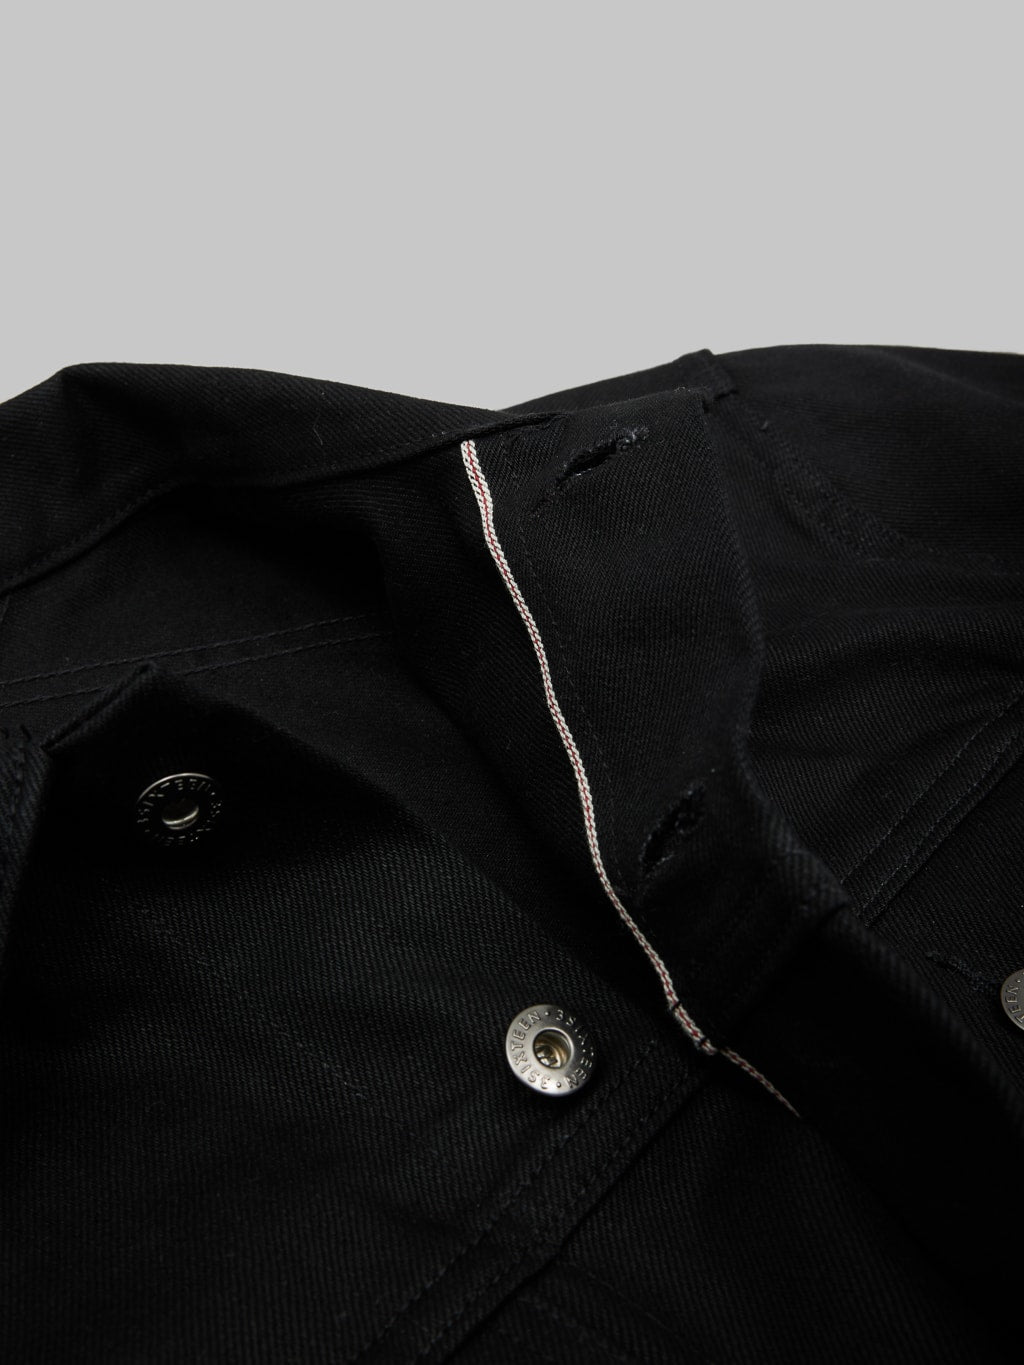 3sixteen type III denim jacket double black selvedge red stitching